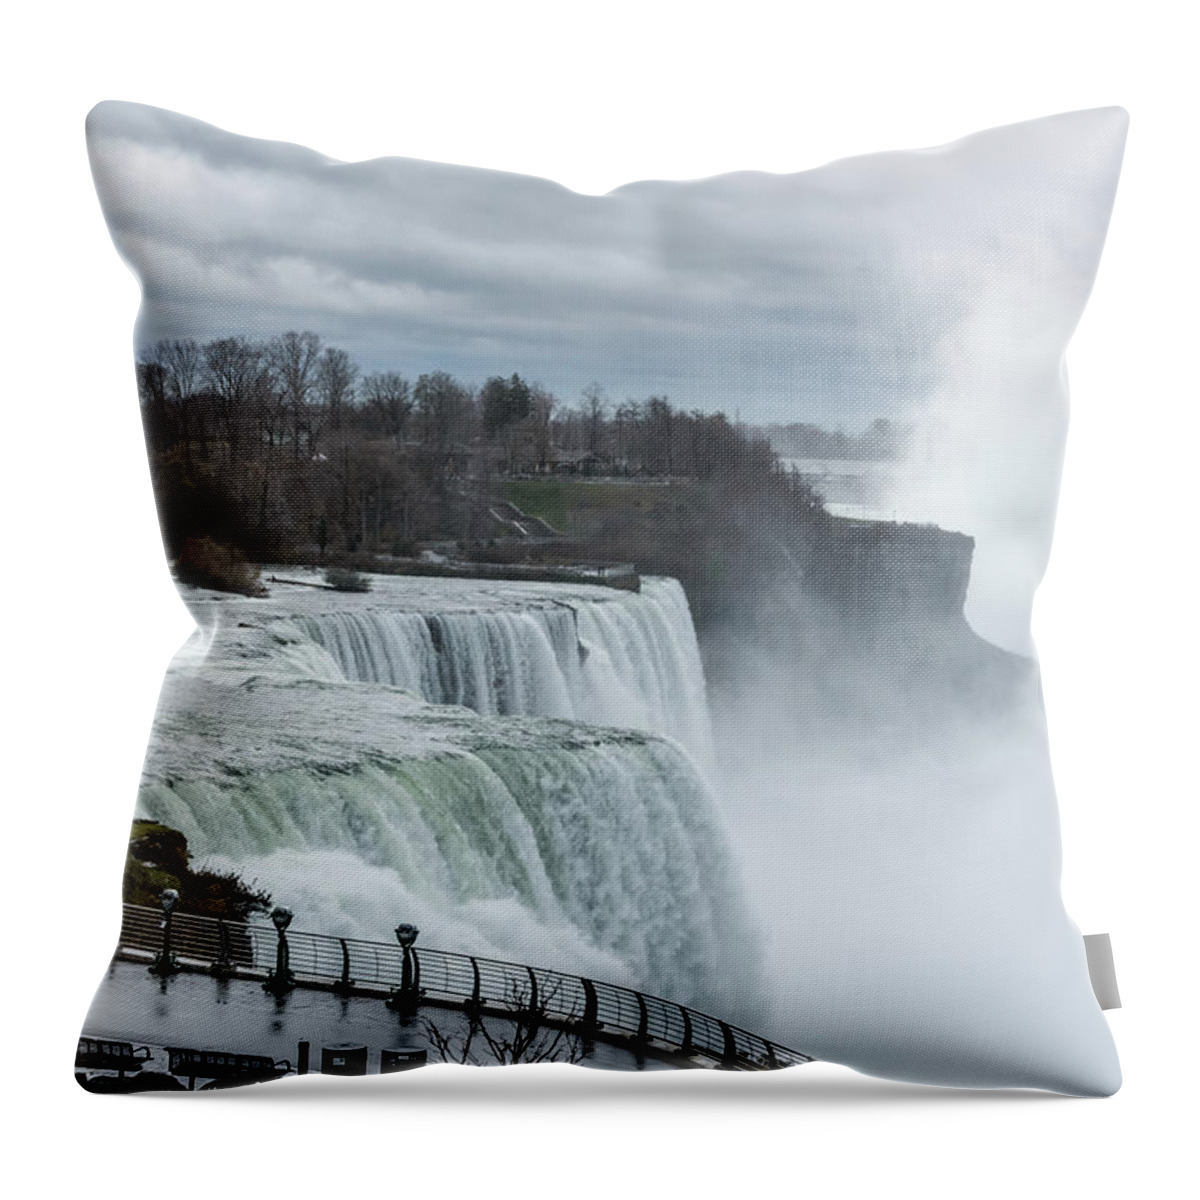 Water Falls Throw Pillow featuring the photograph The Mighty Niagara by Jaime Mercado